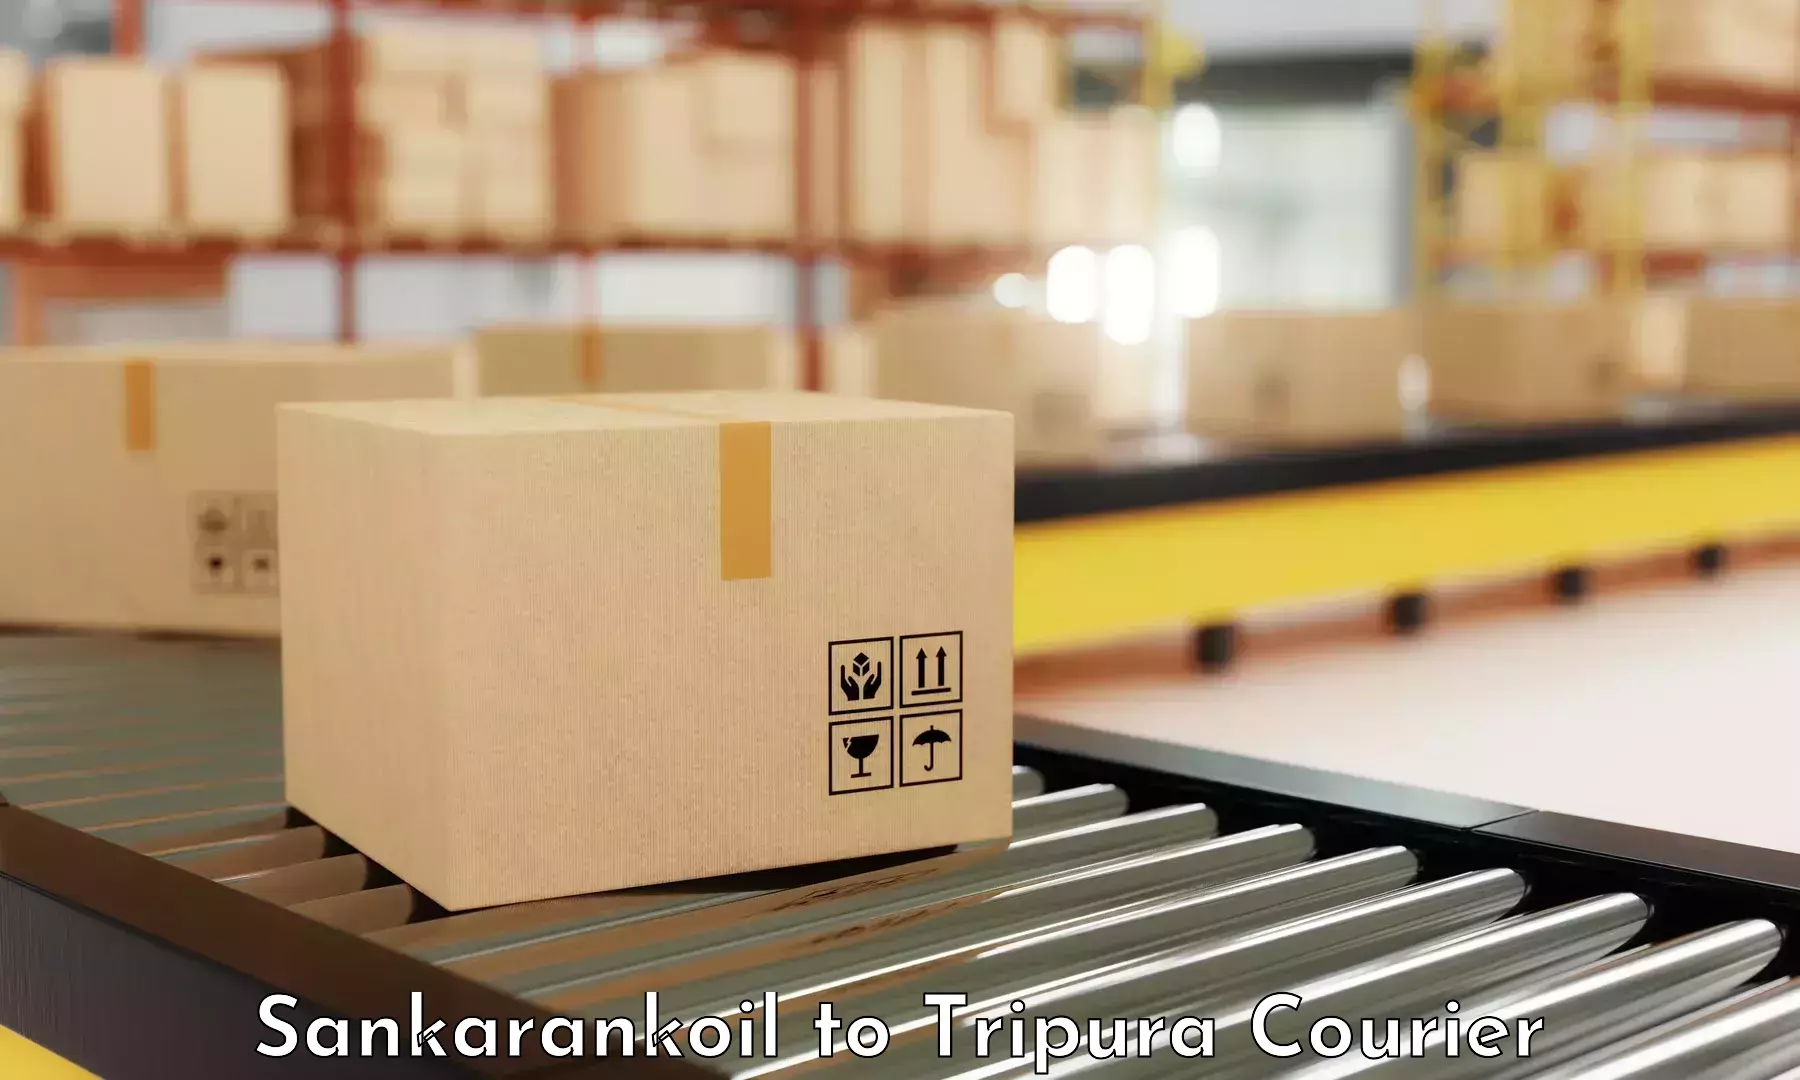 User-friendly delivery service Sankarankoil to Agartala